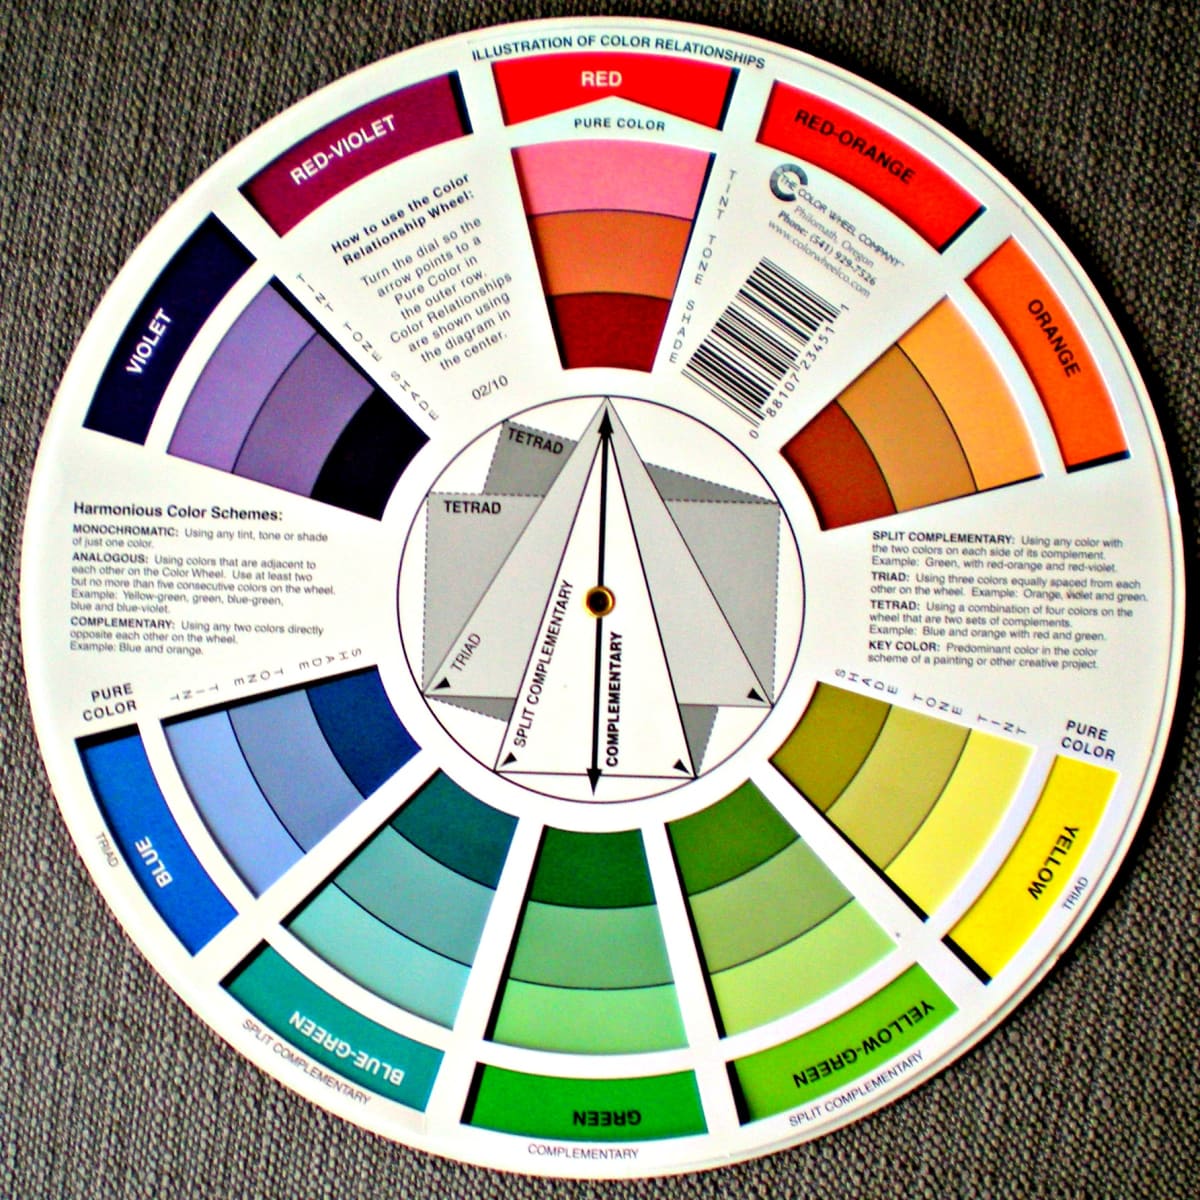 III. Understanding the Impact of Different Colors